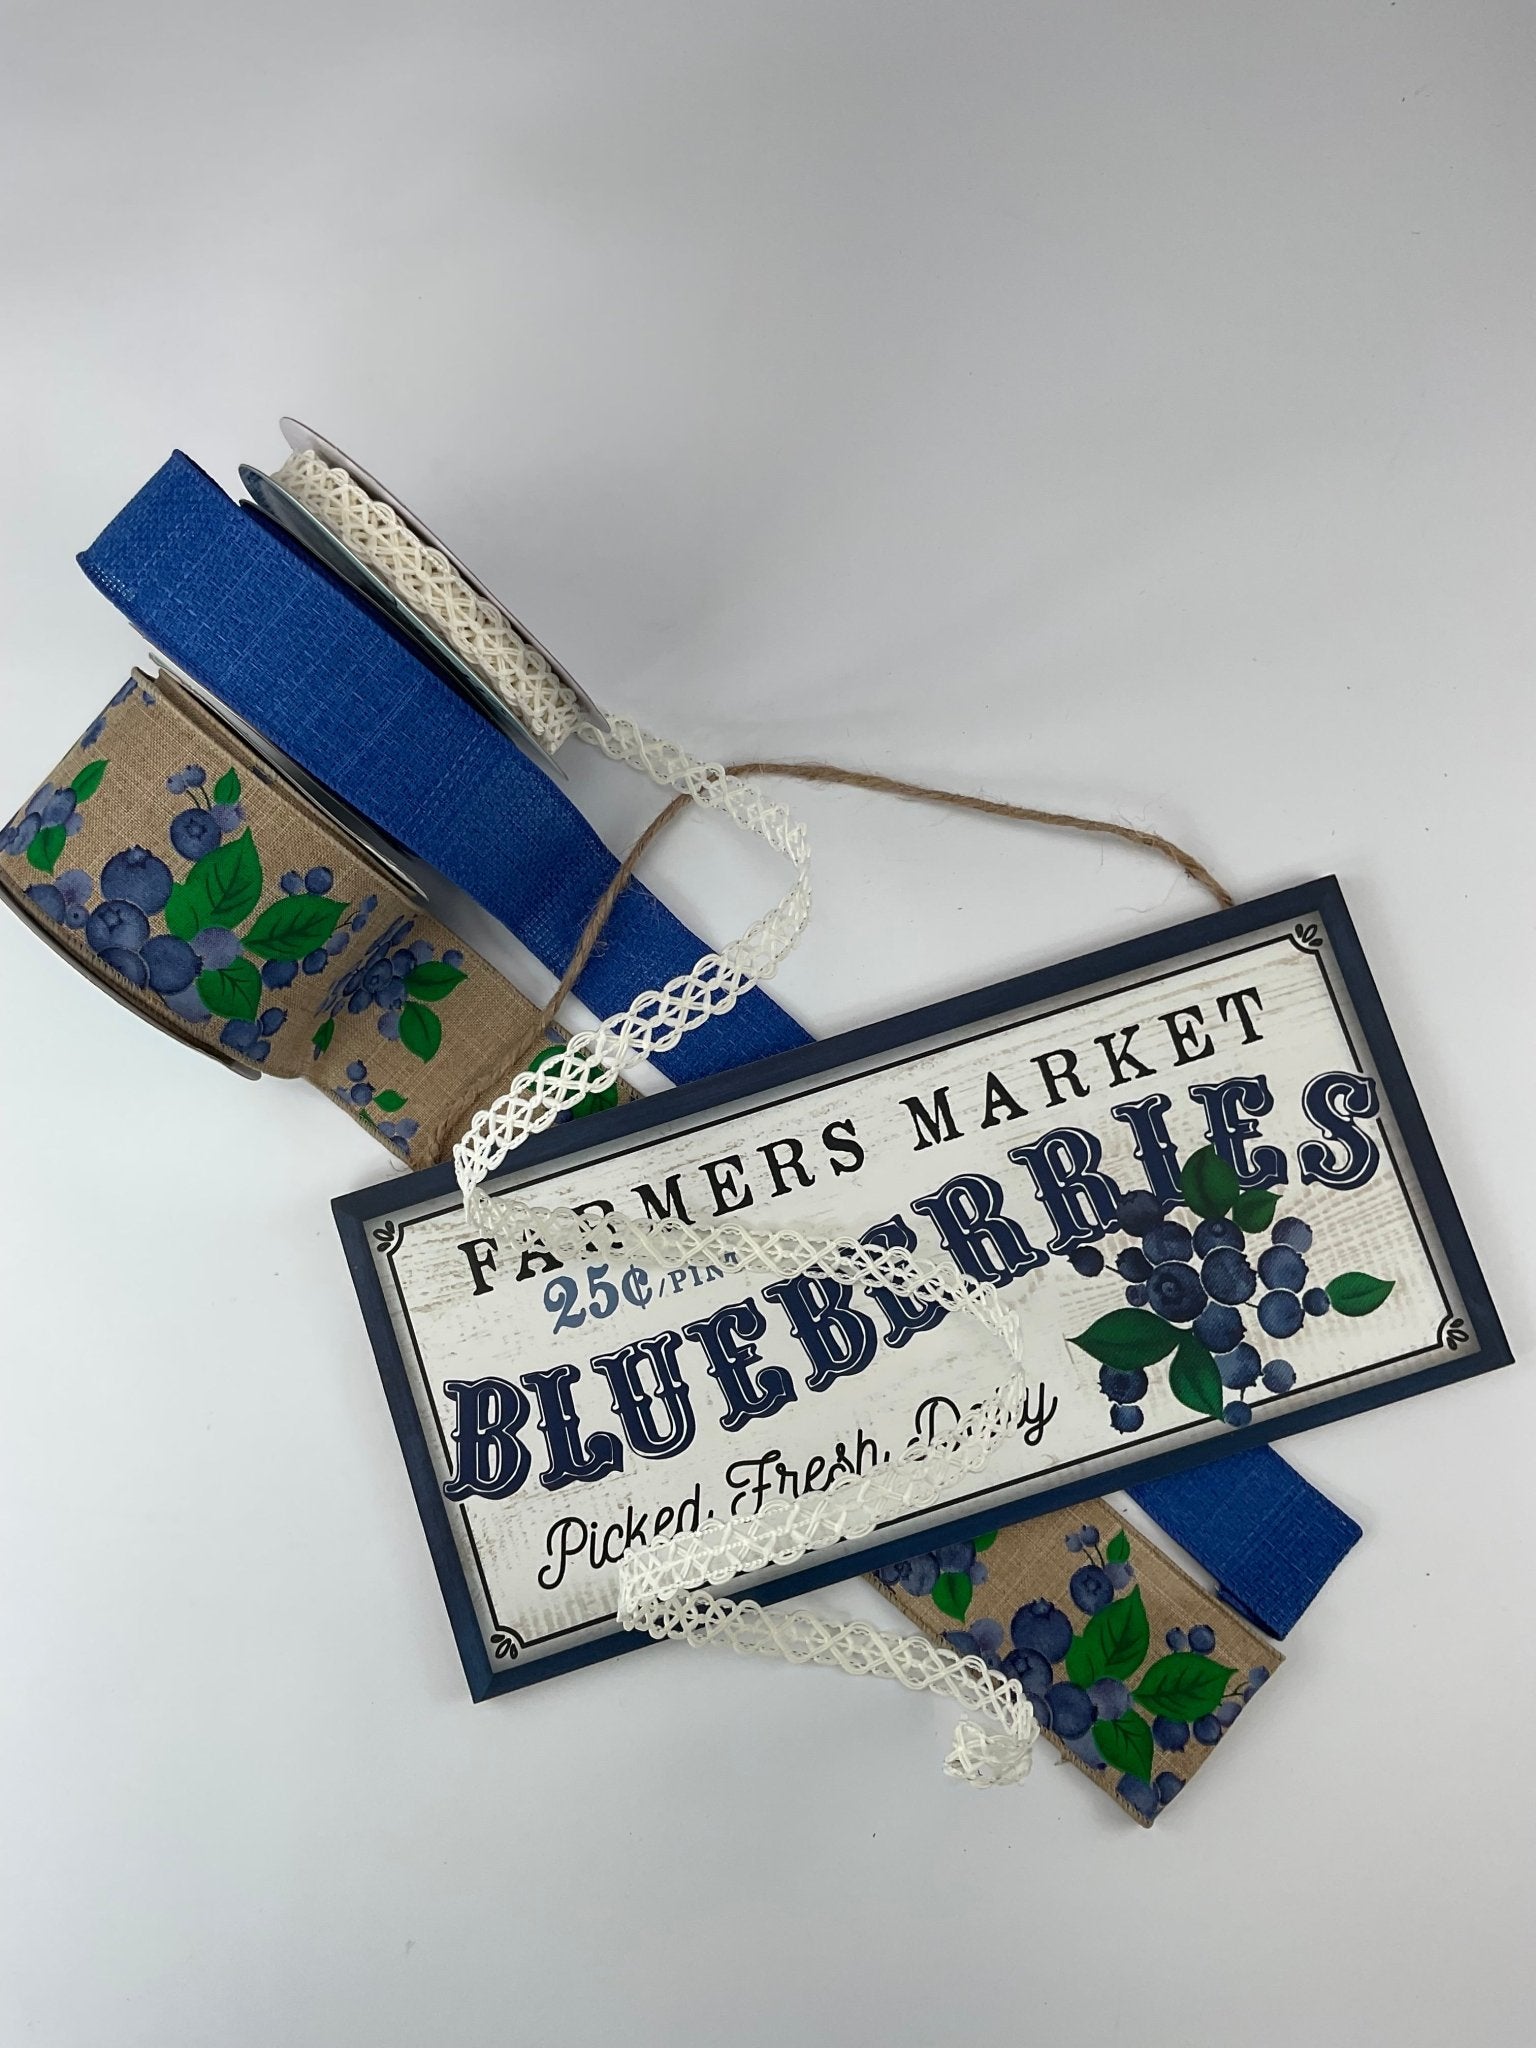 Blueberries market sign and ribbon bundle - Greenery Marketsigns for wreathsBlberryx5